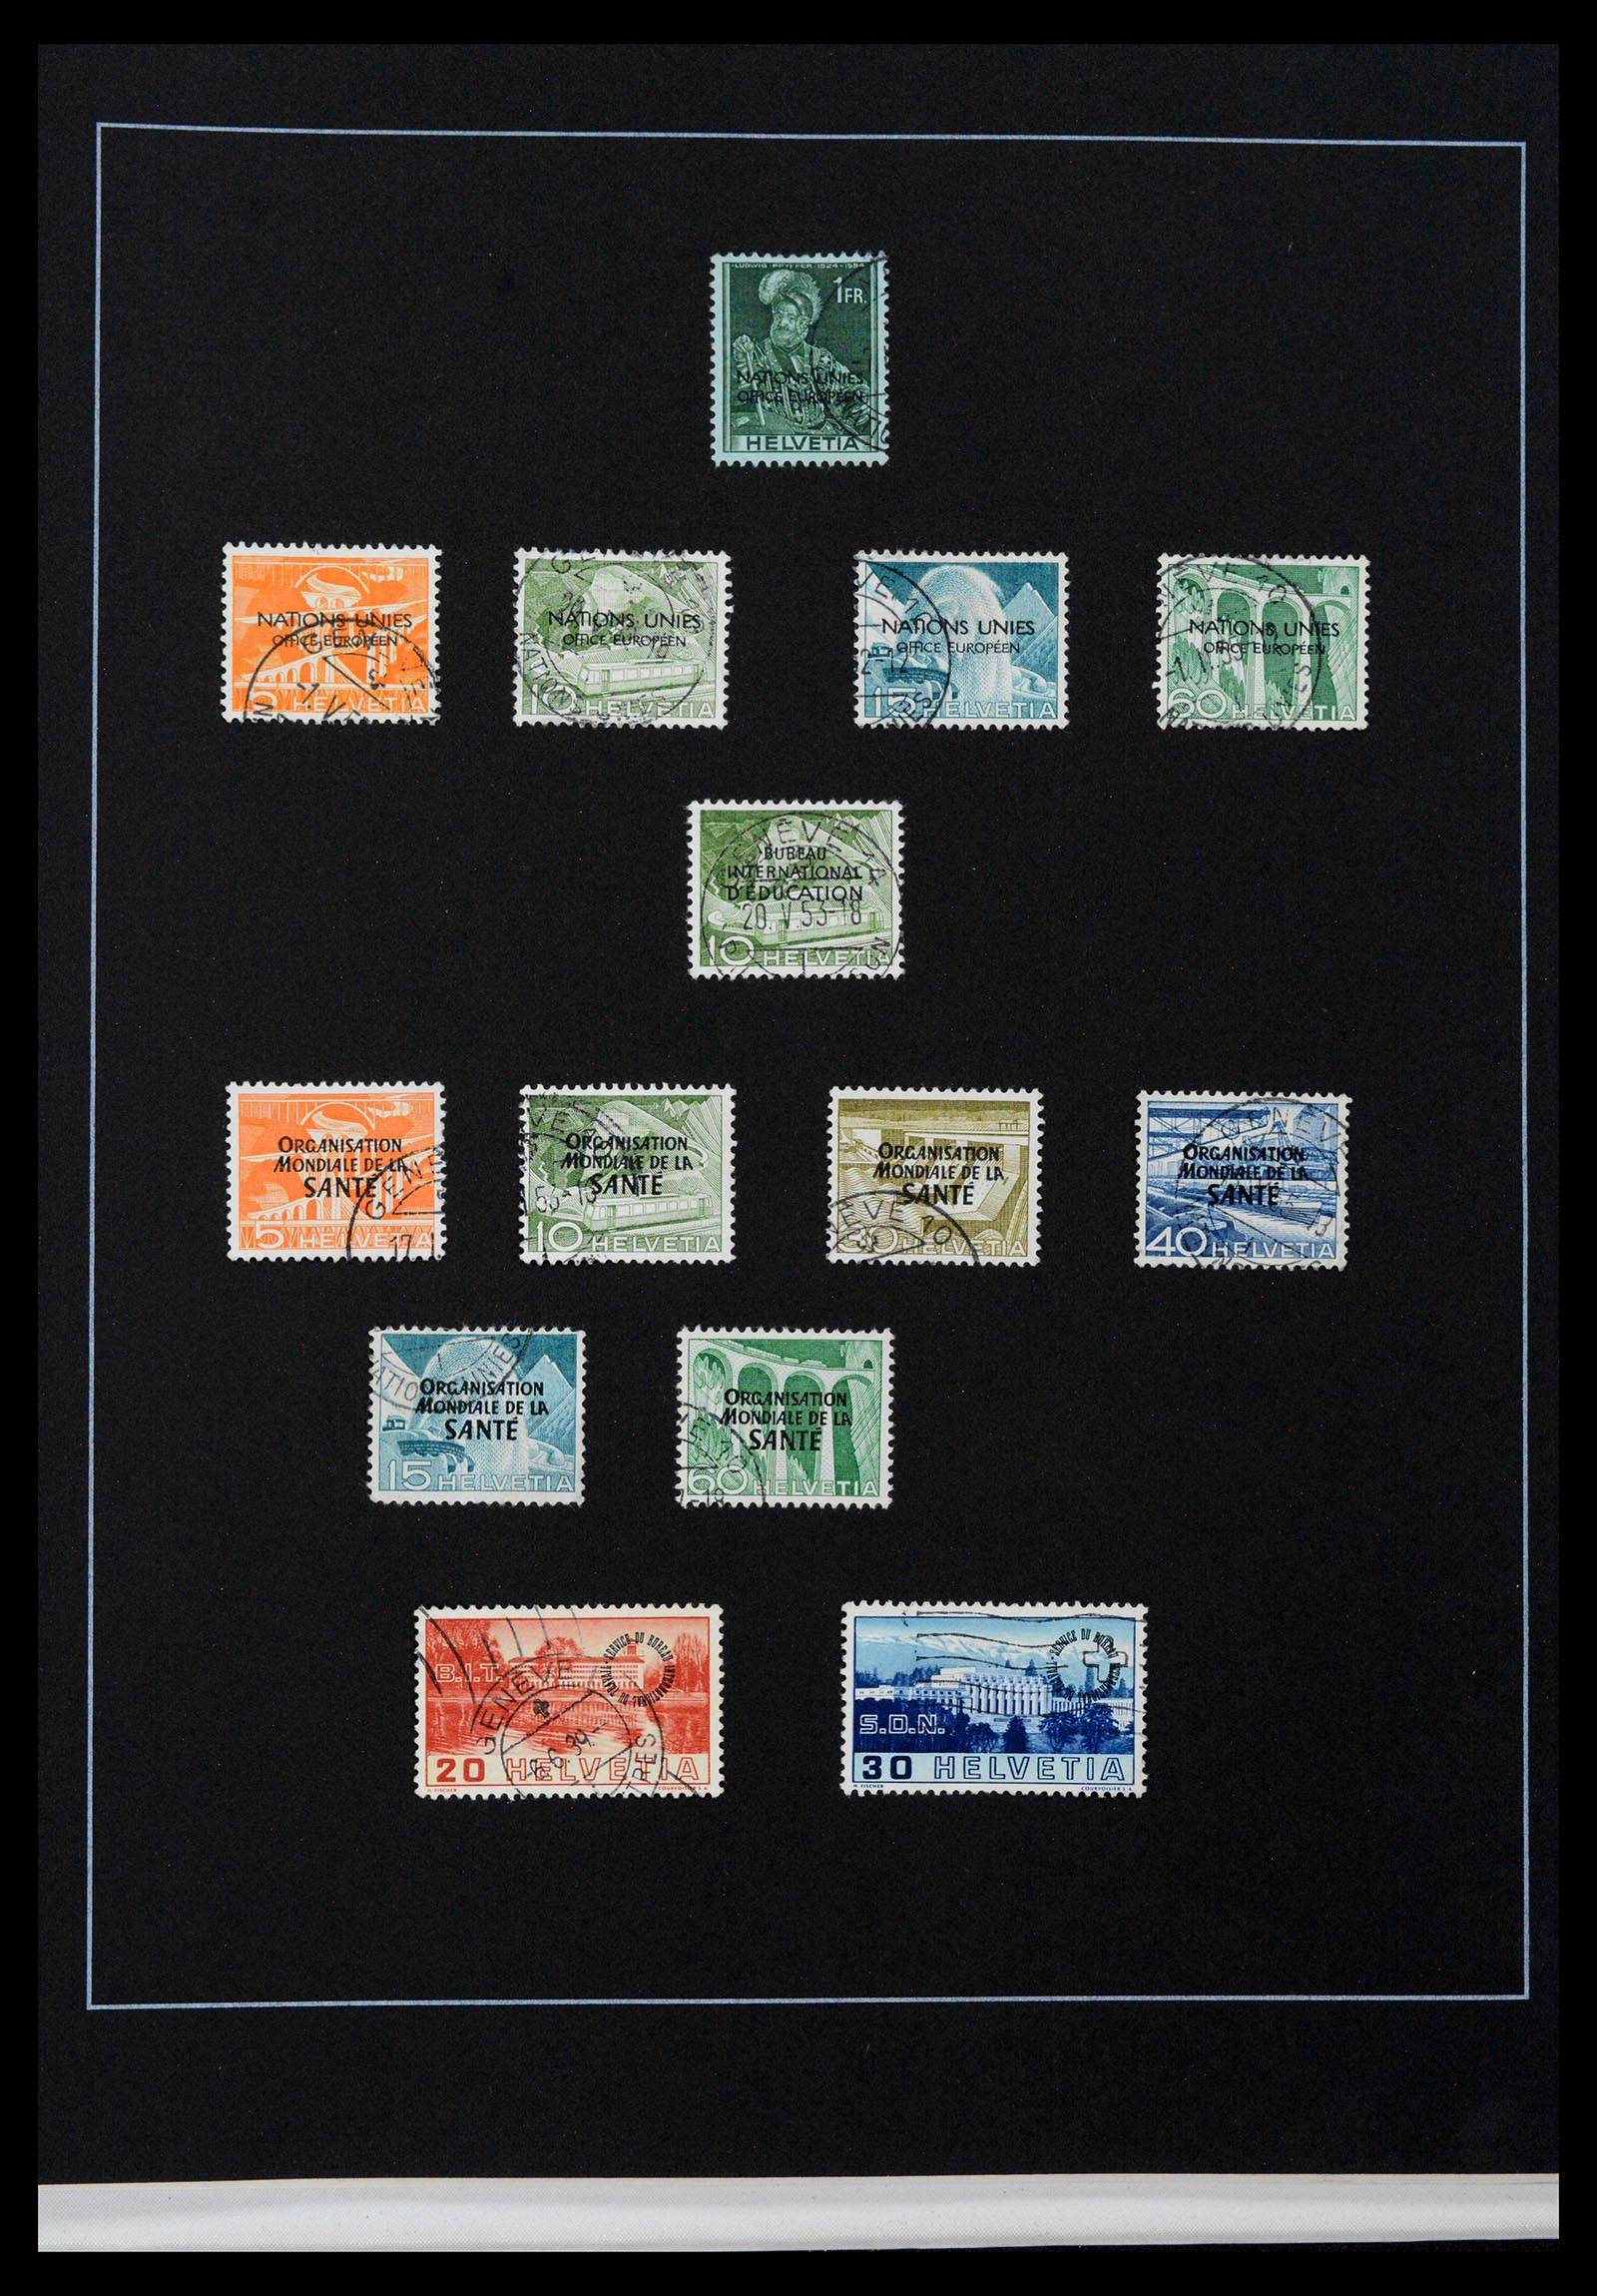 39235 0081 - Stamp collection 39235 Switzerland 1843-1960.